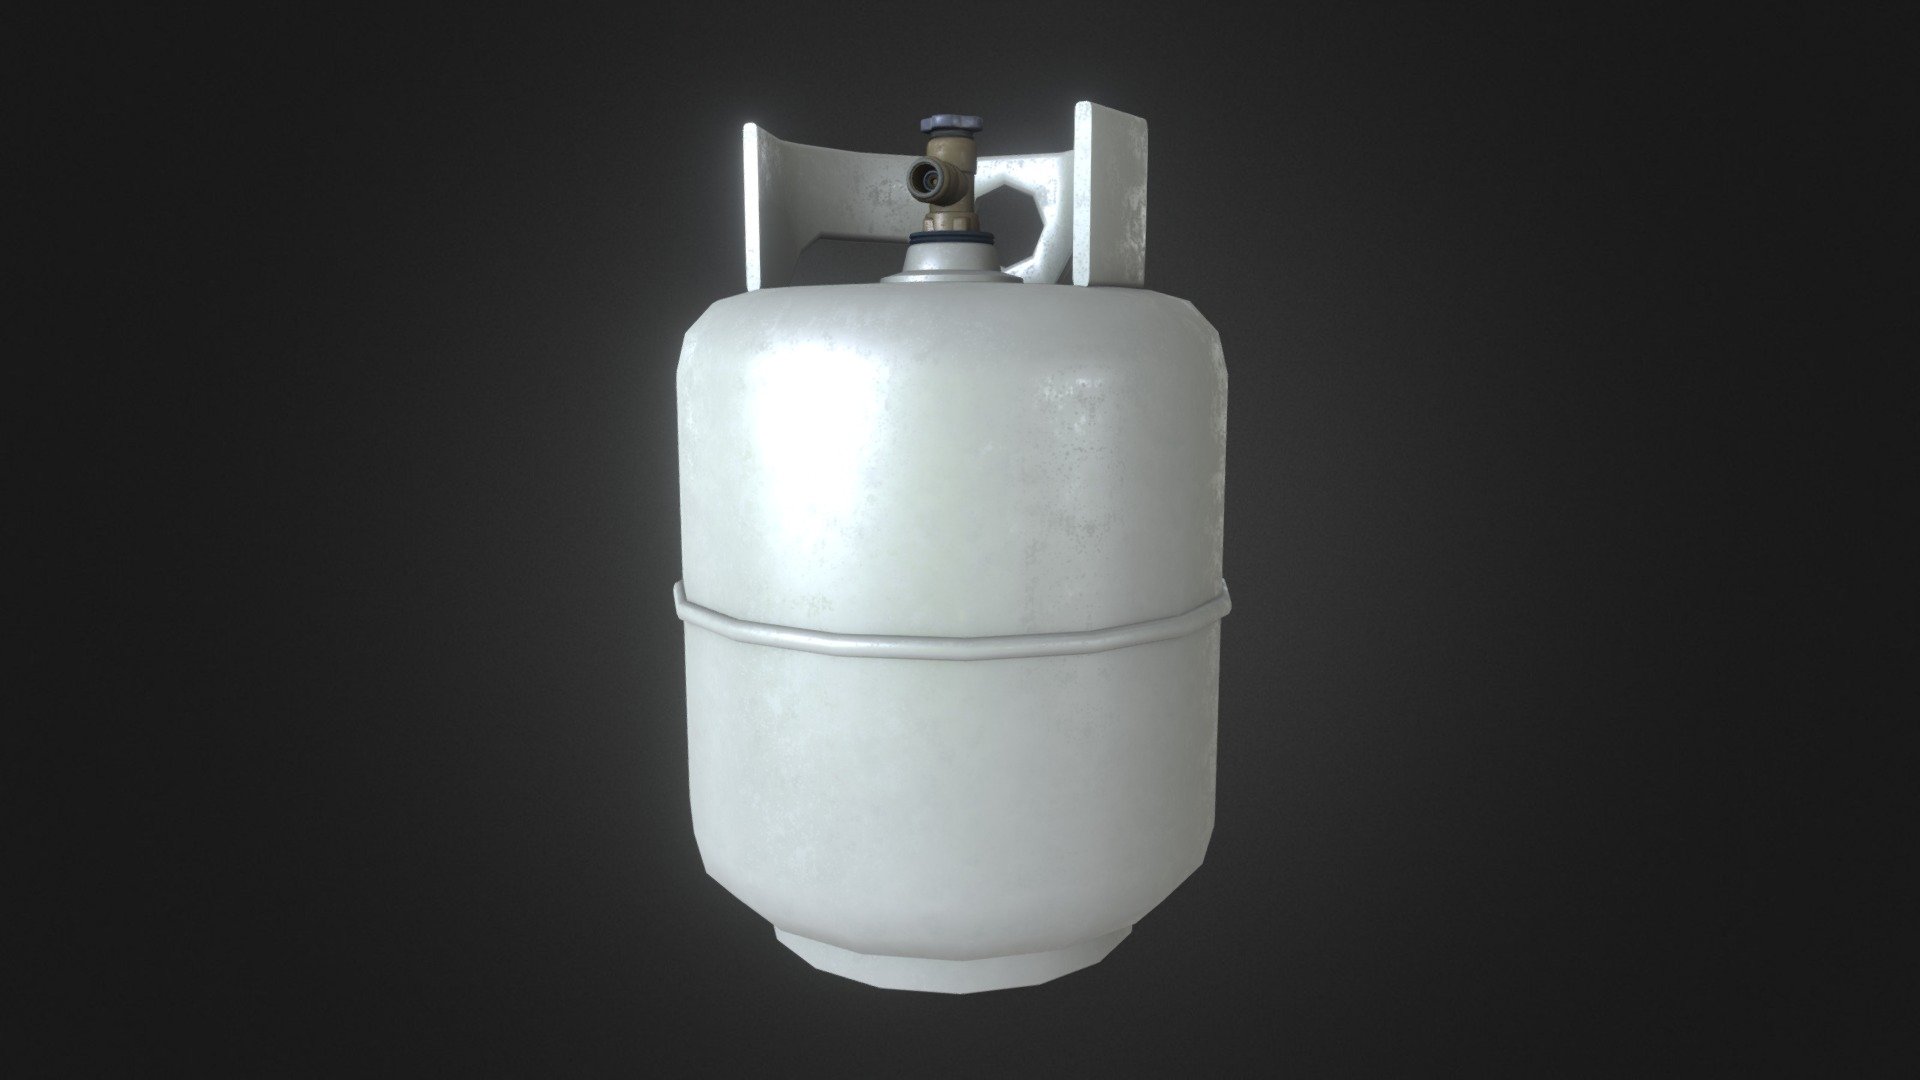 Here is a Simple propane tank i created, hope you like it :P 3d model